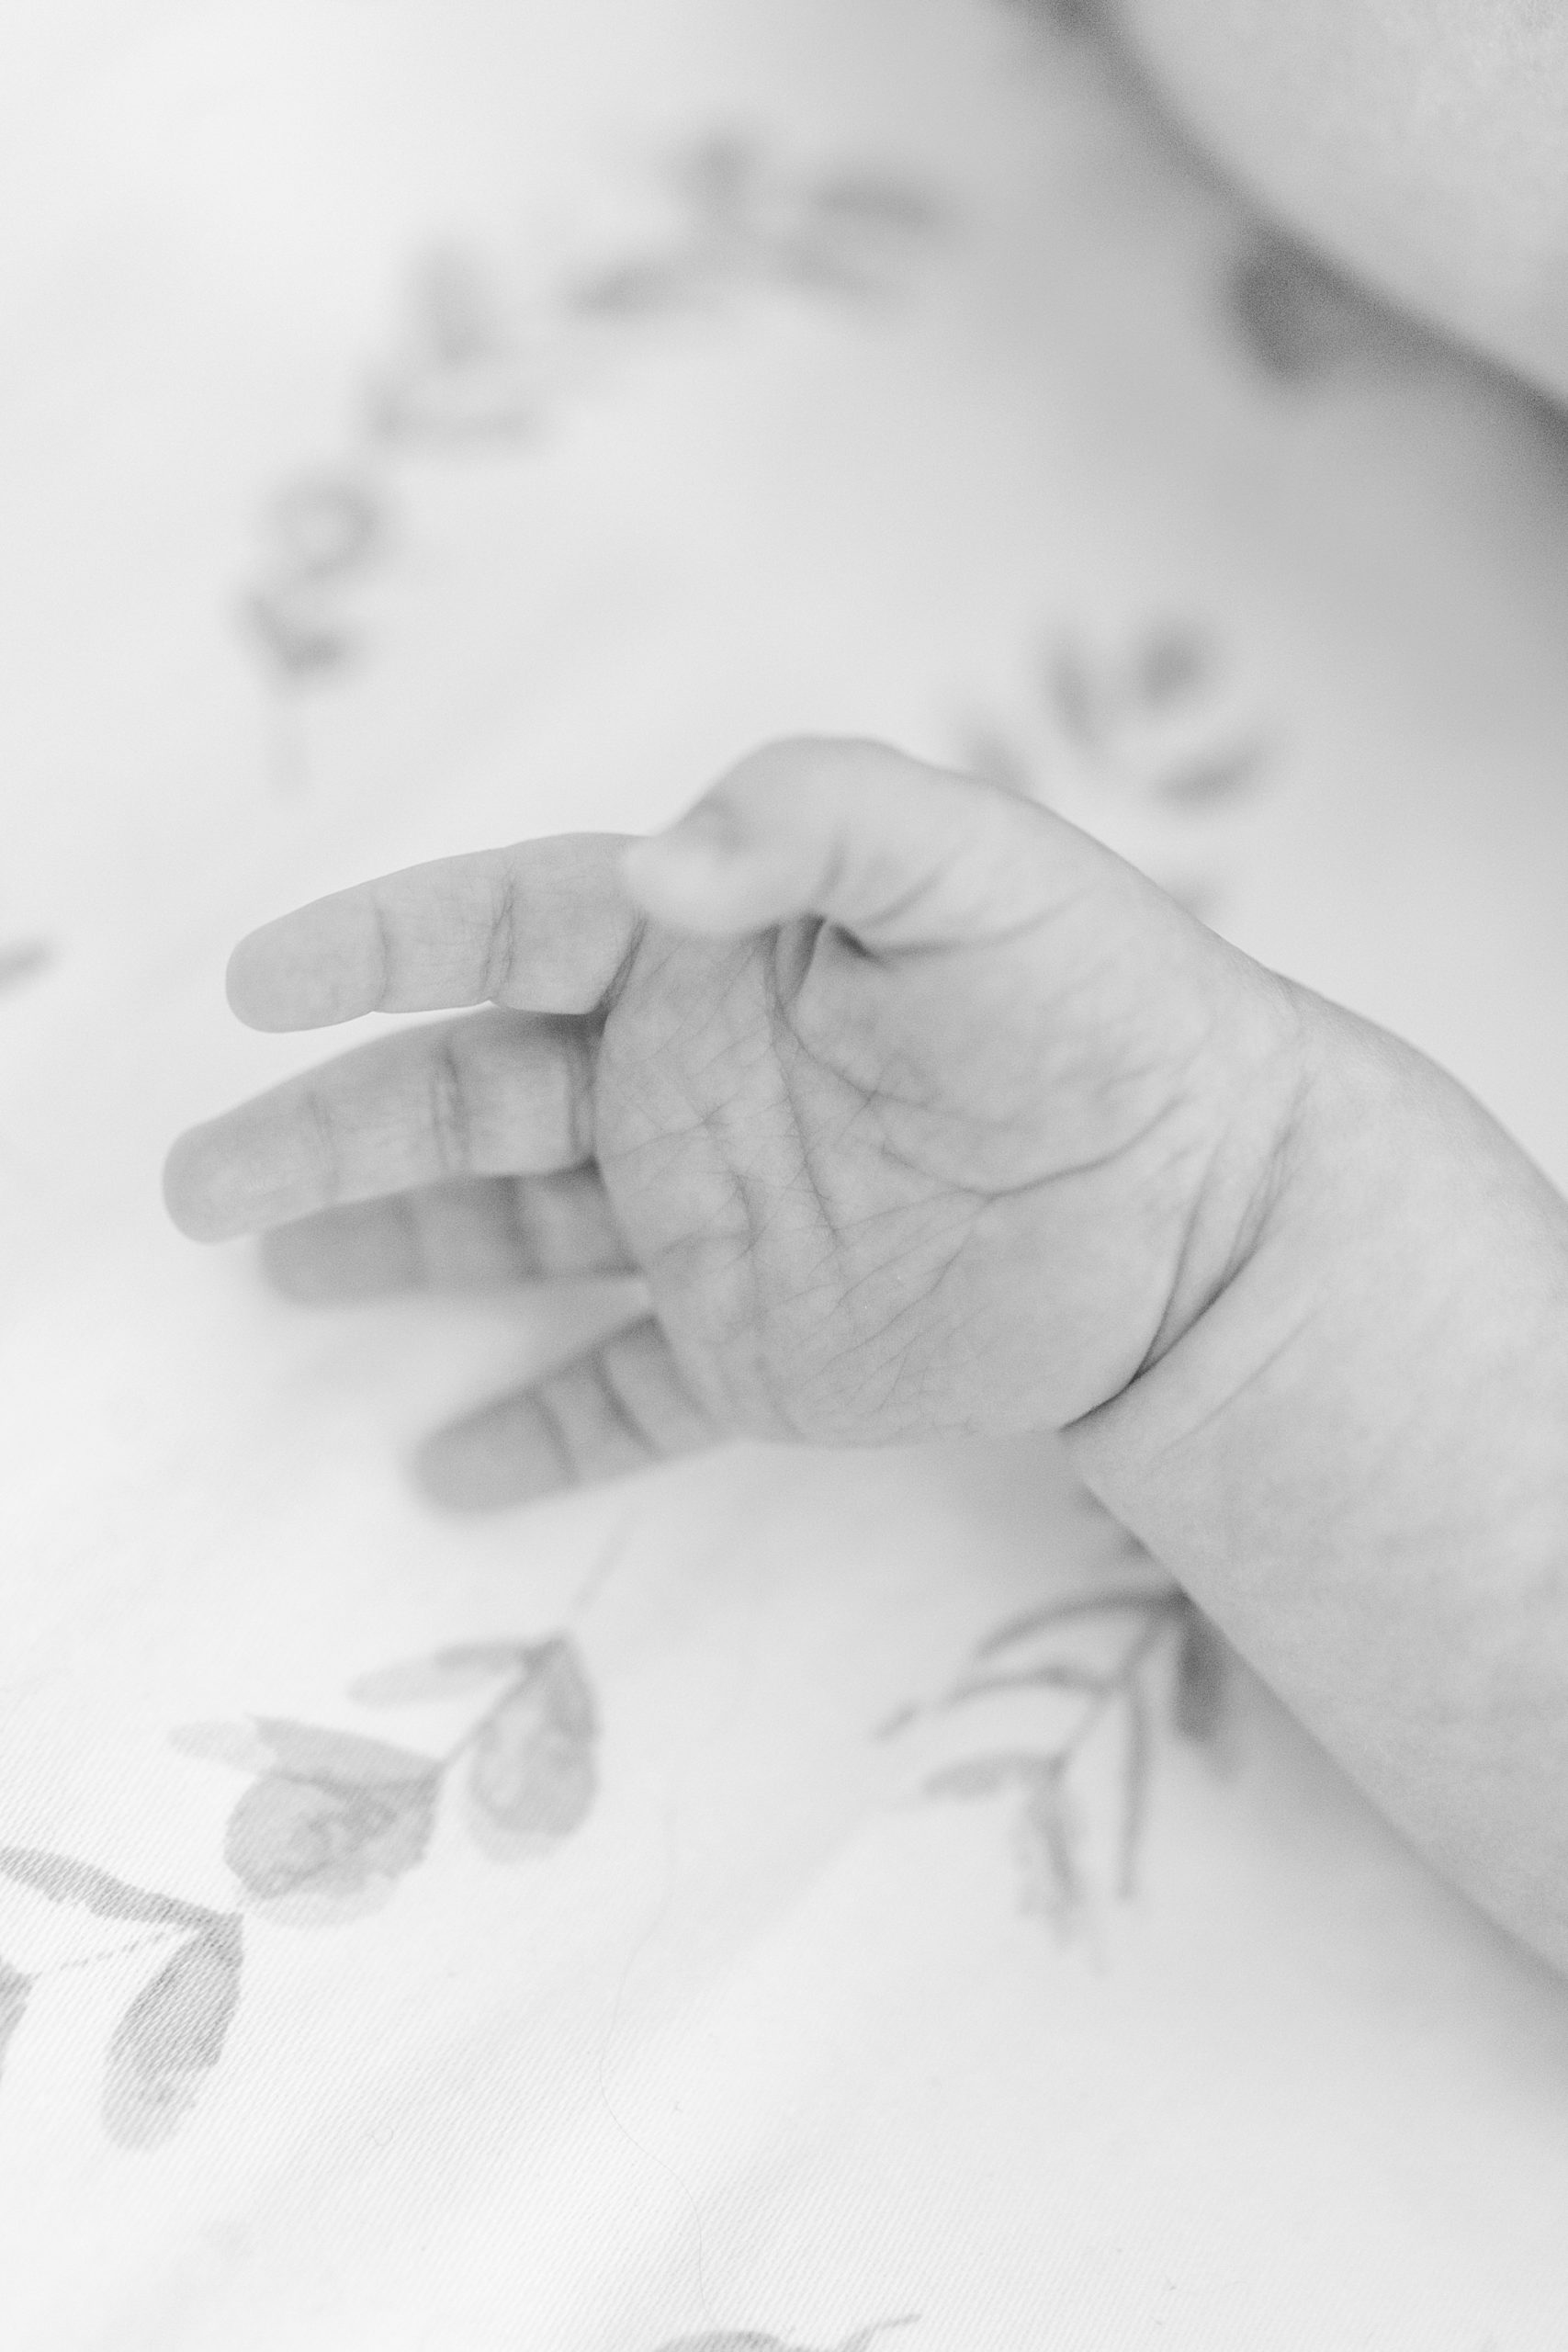 black and white closeup of baby's hand